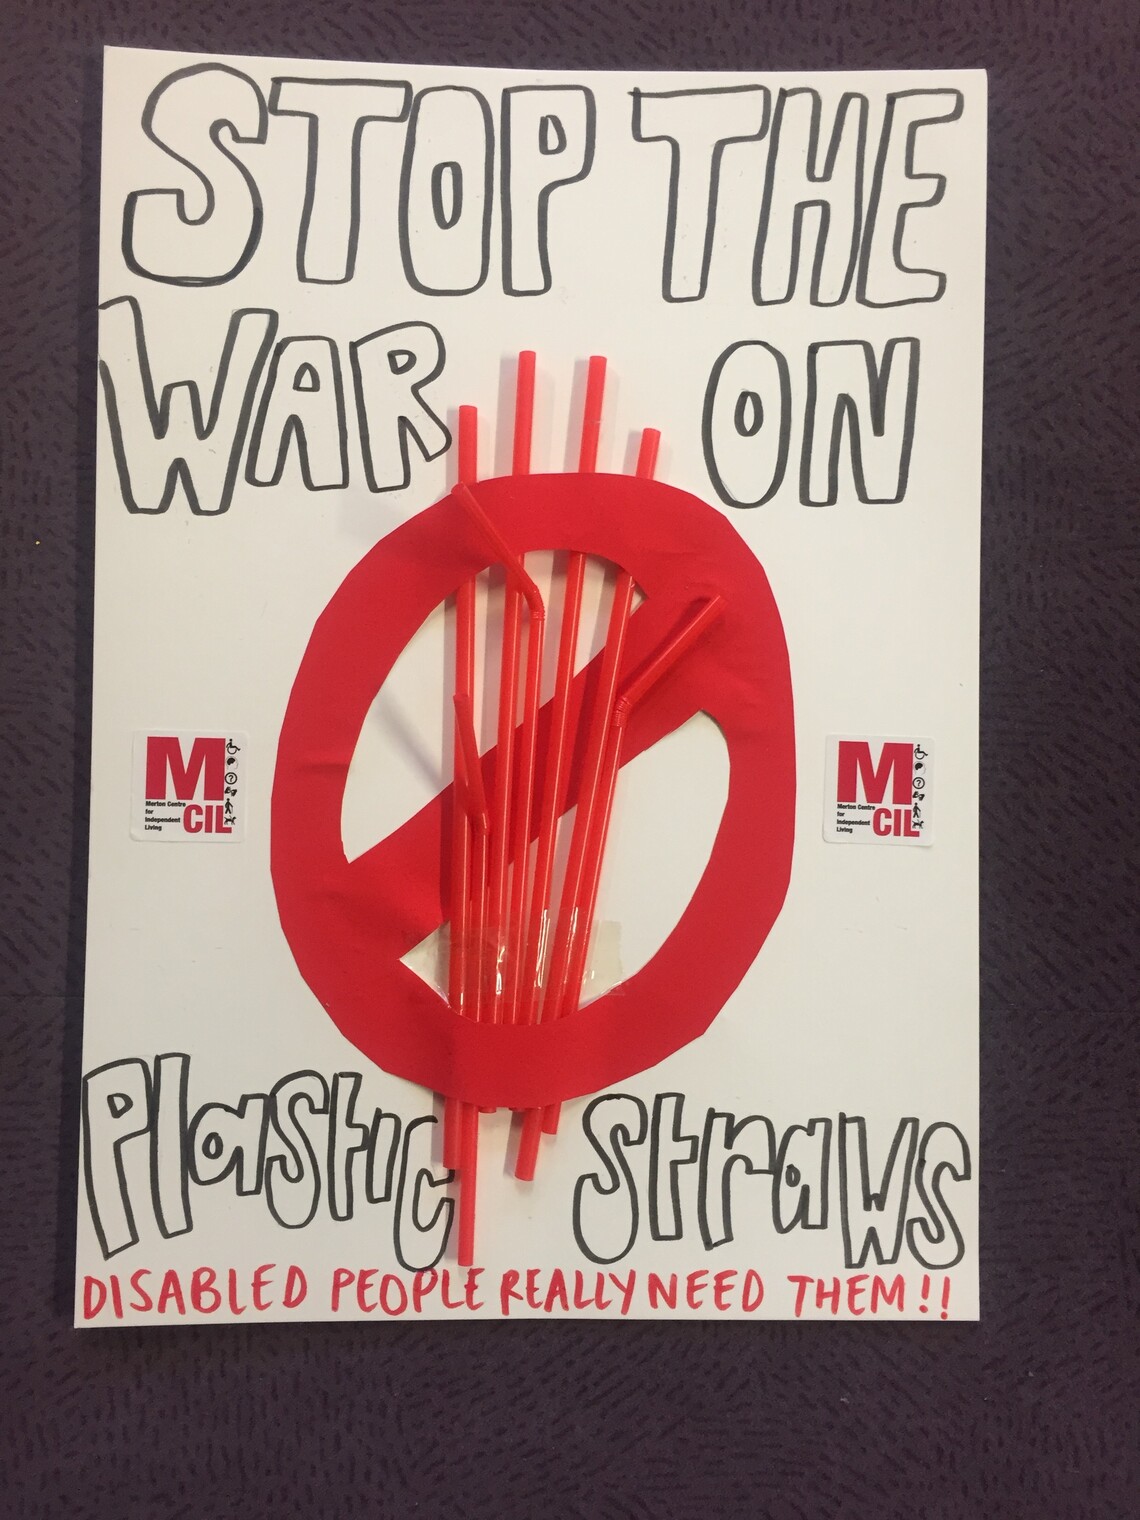 Stop the war on plastic straws